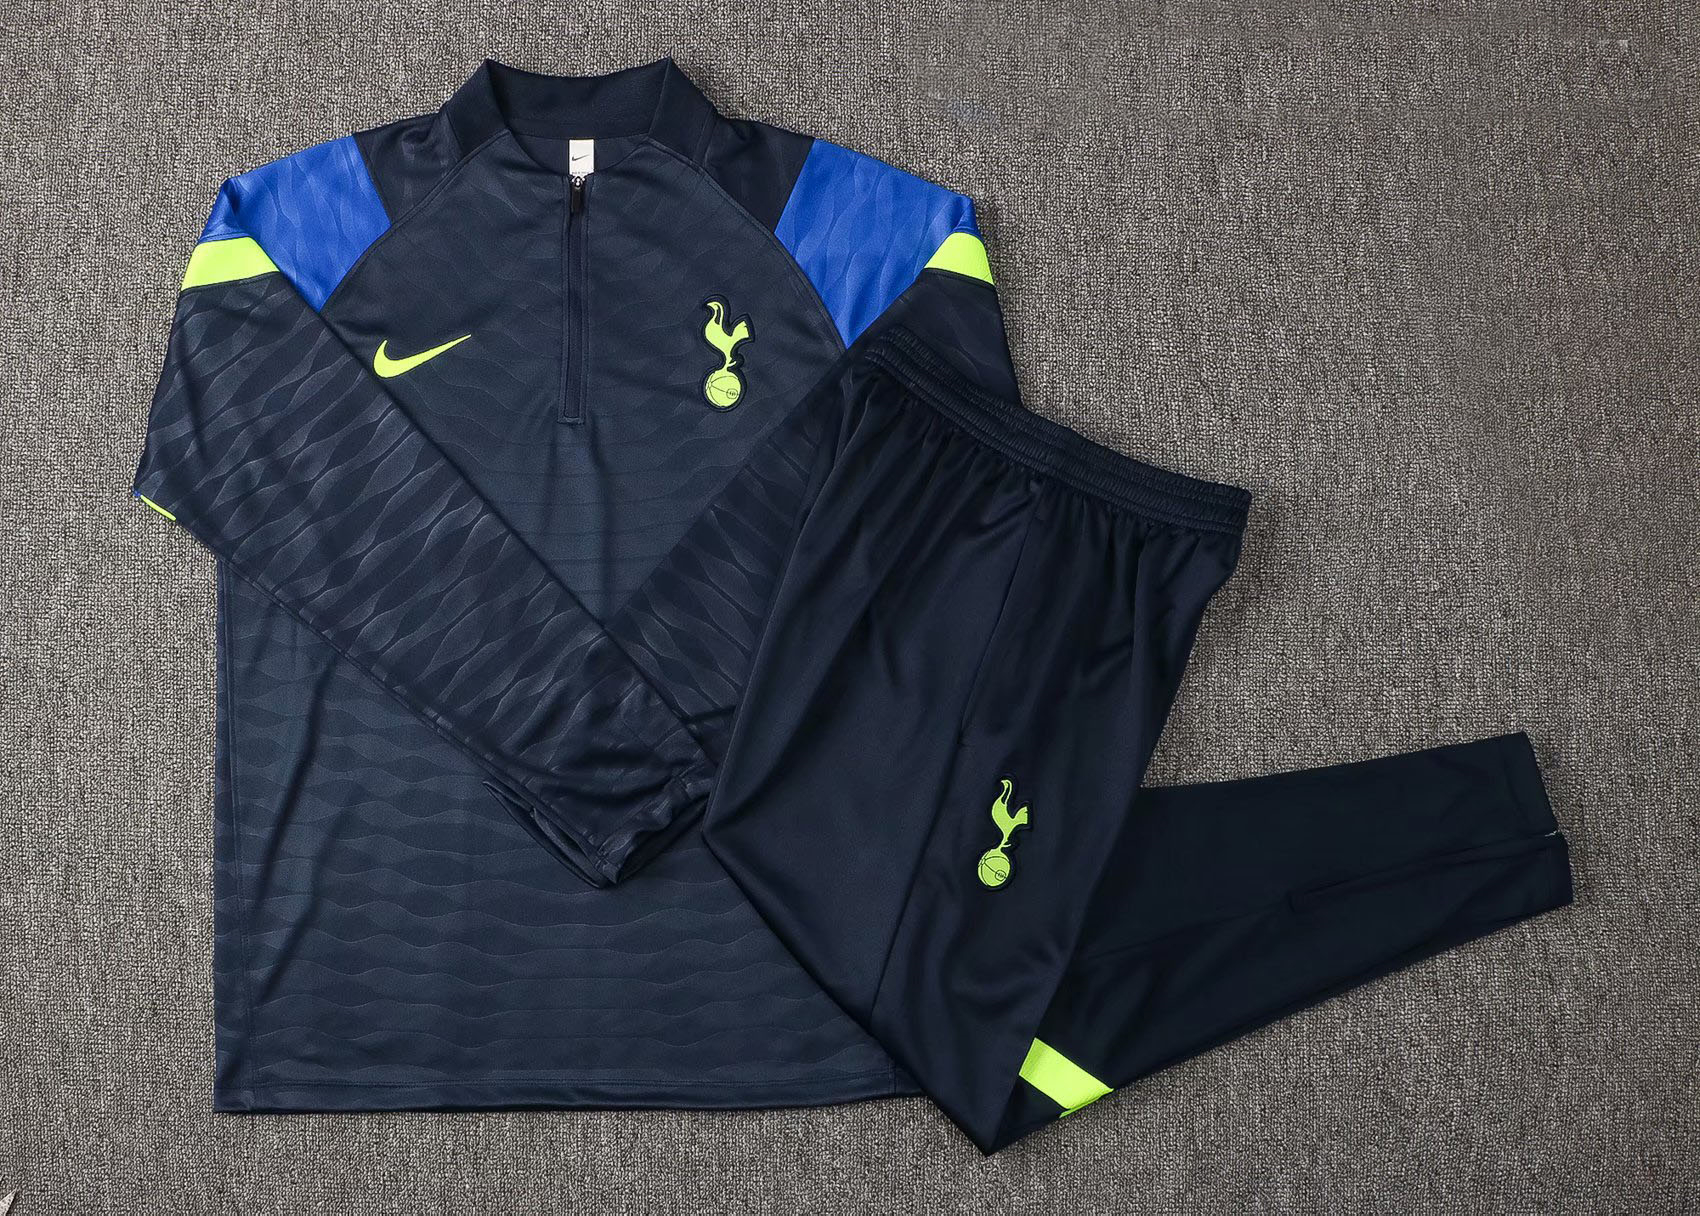 Kid's Tottenham Hotspur Navy Training Suit 21/22